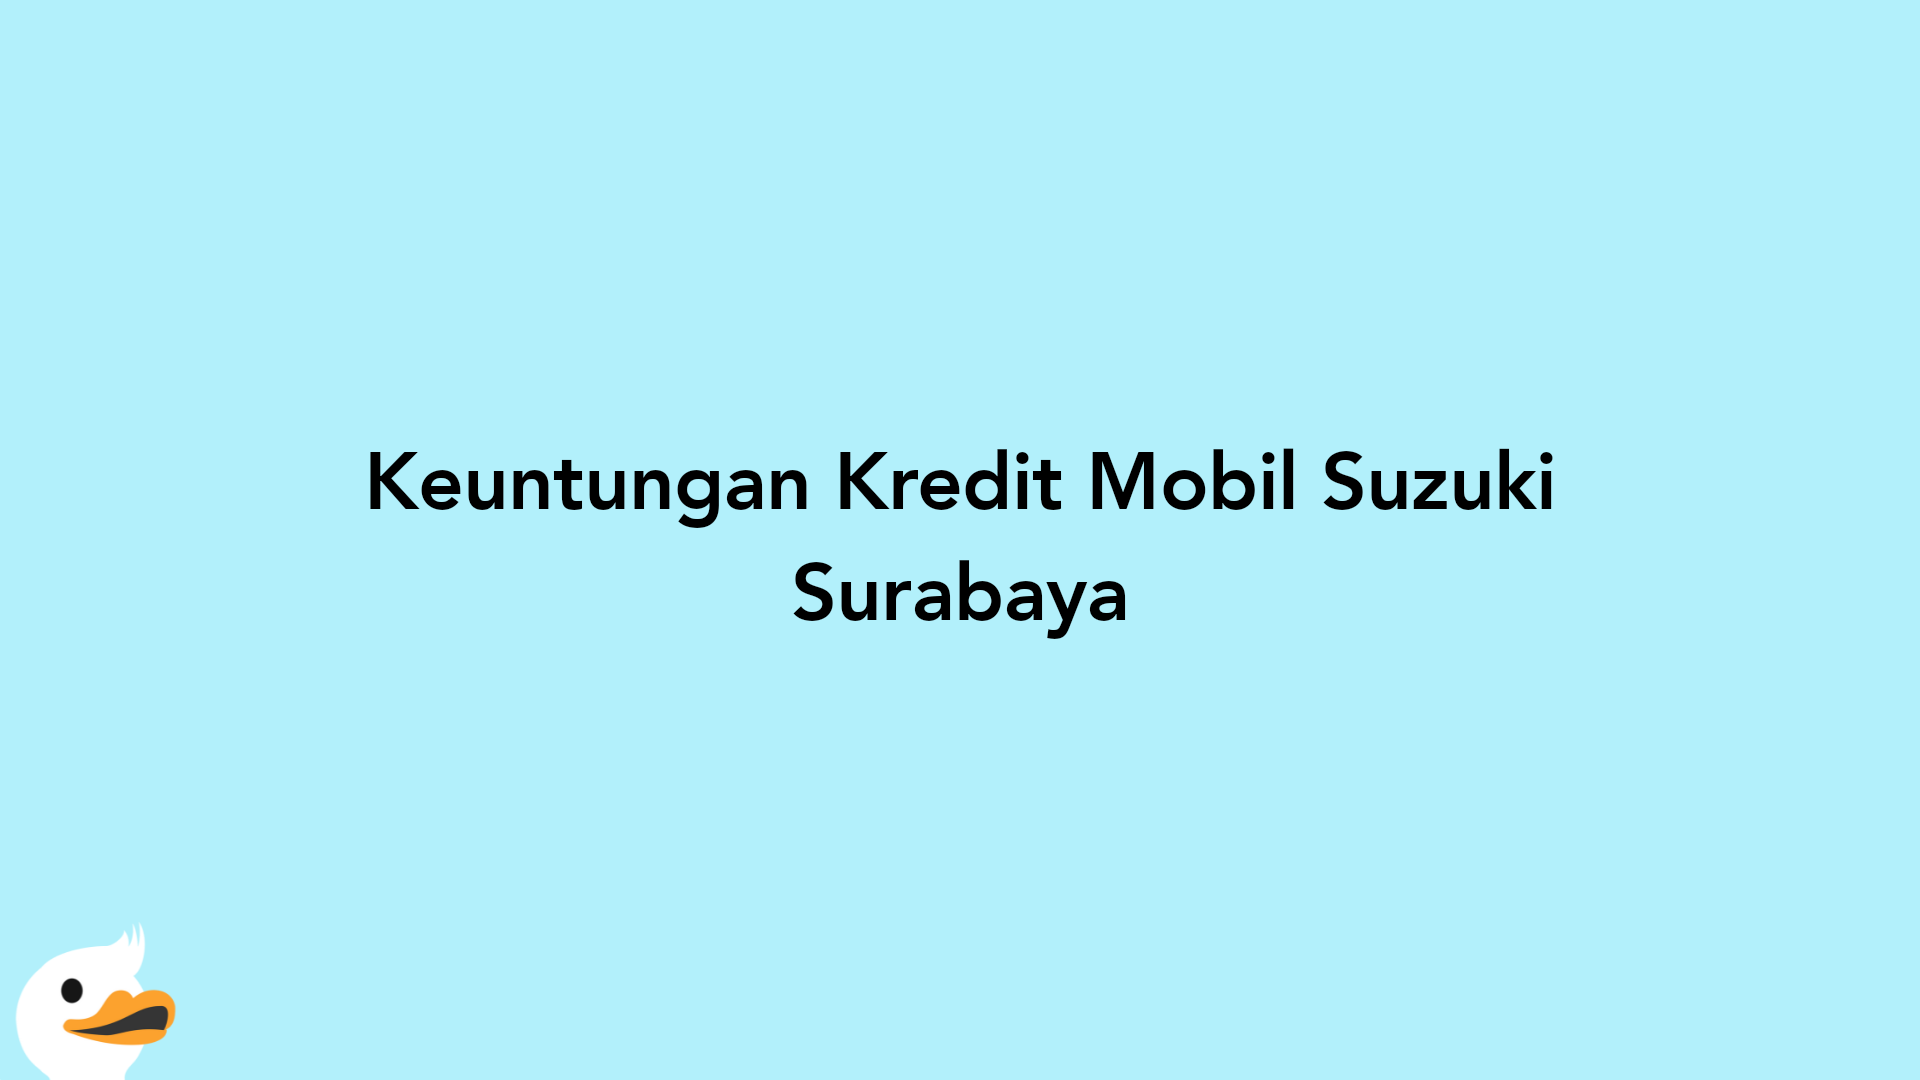 Keuntungan Kredit Mobil Suzuki Surabaya